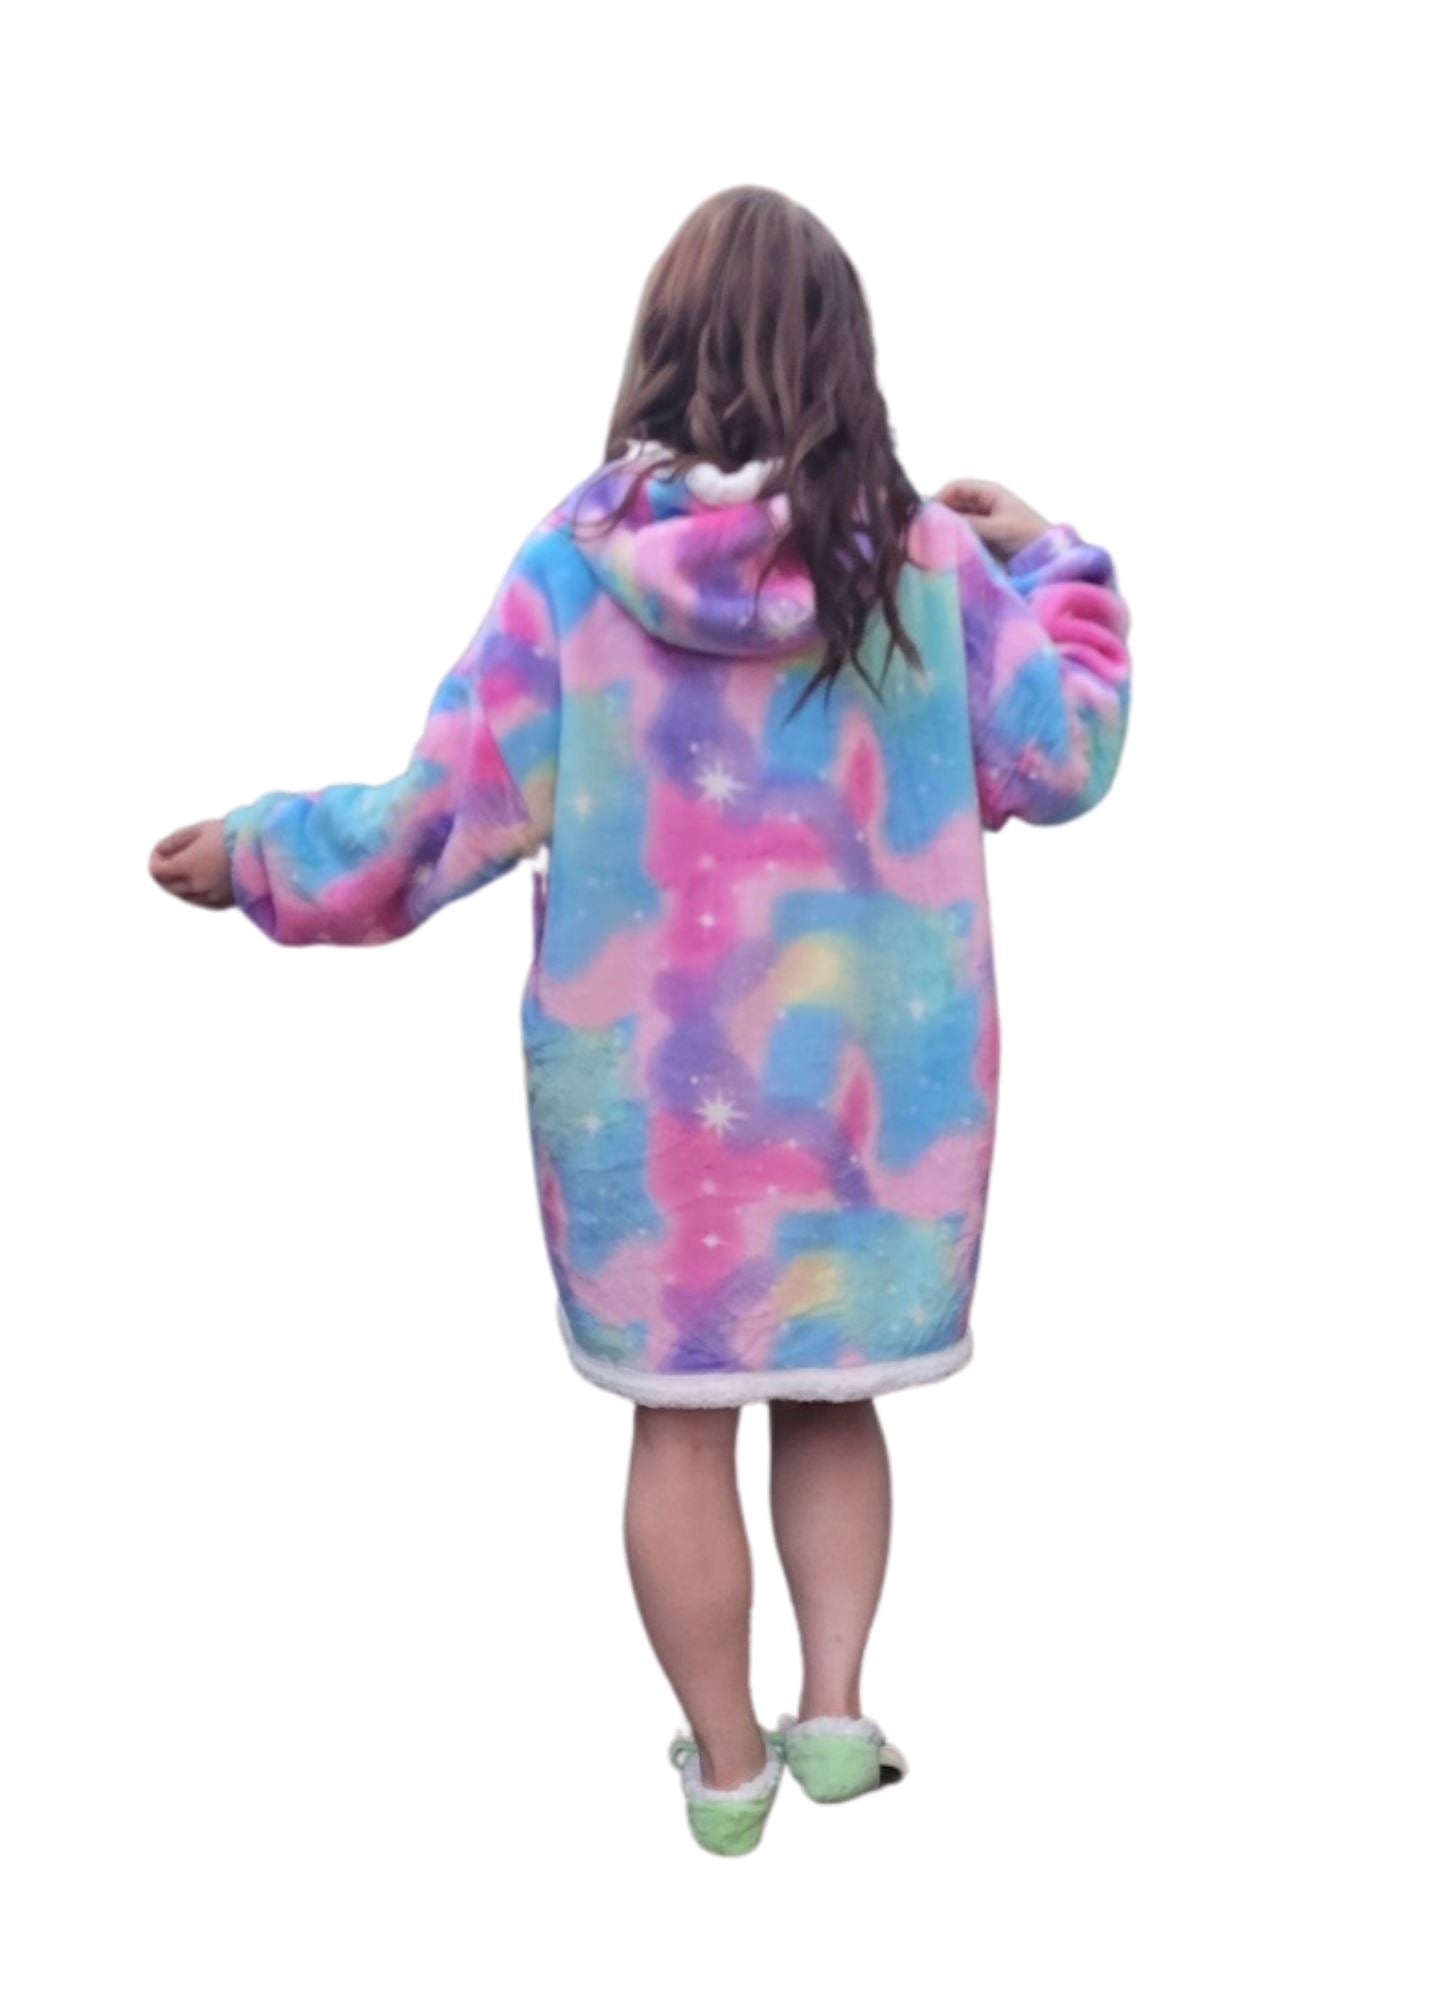 Oversized Blanket SNOODI OODI Jumpers - 5 designs oversized hoody Aambers Goodies xx 